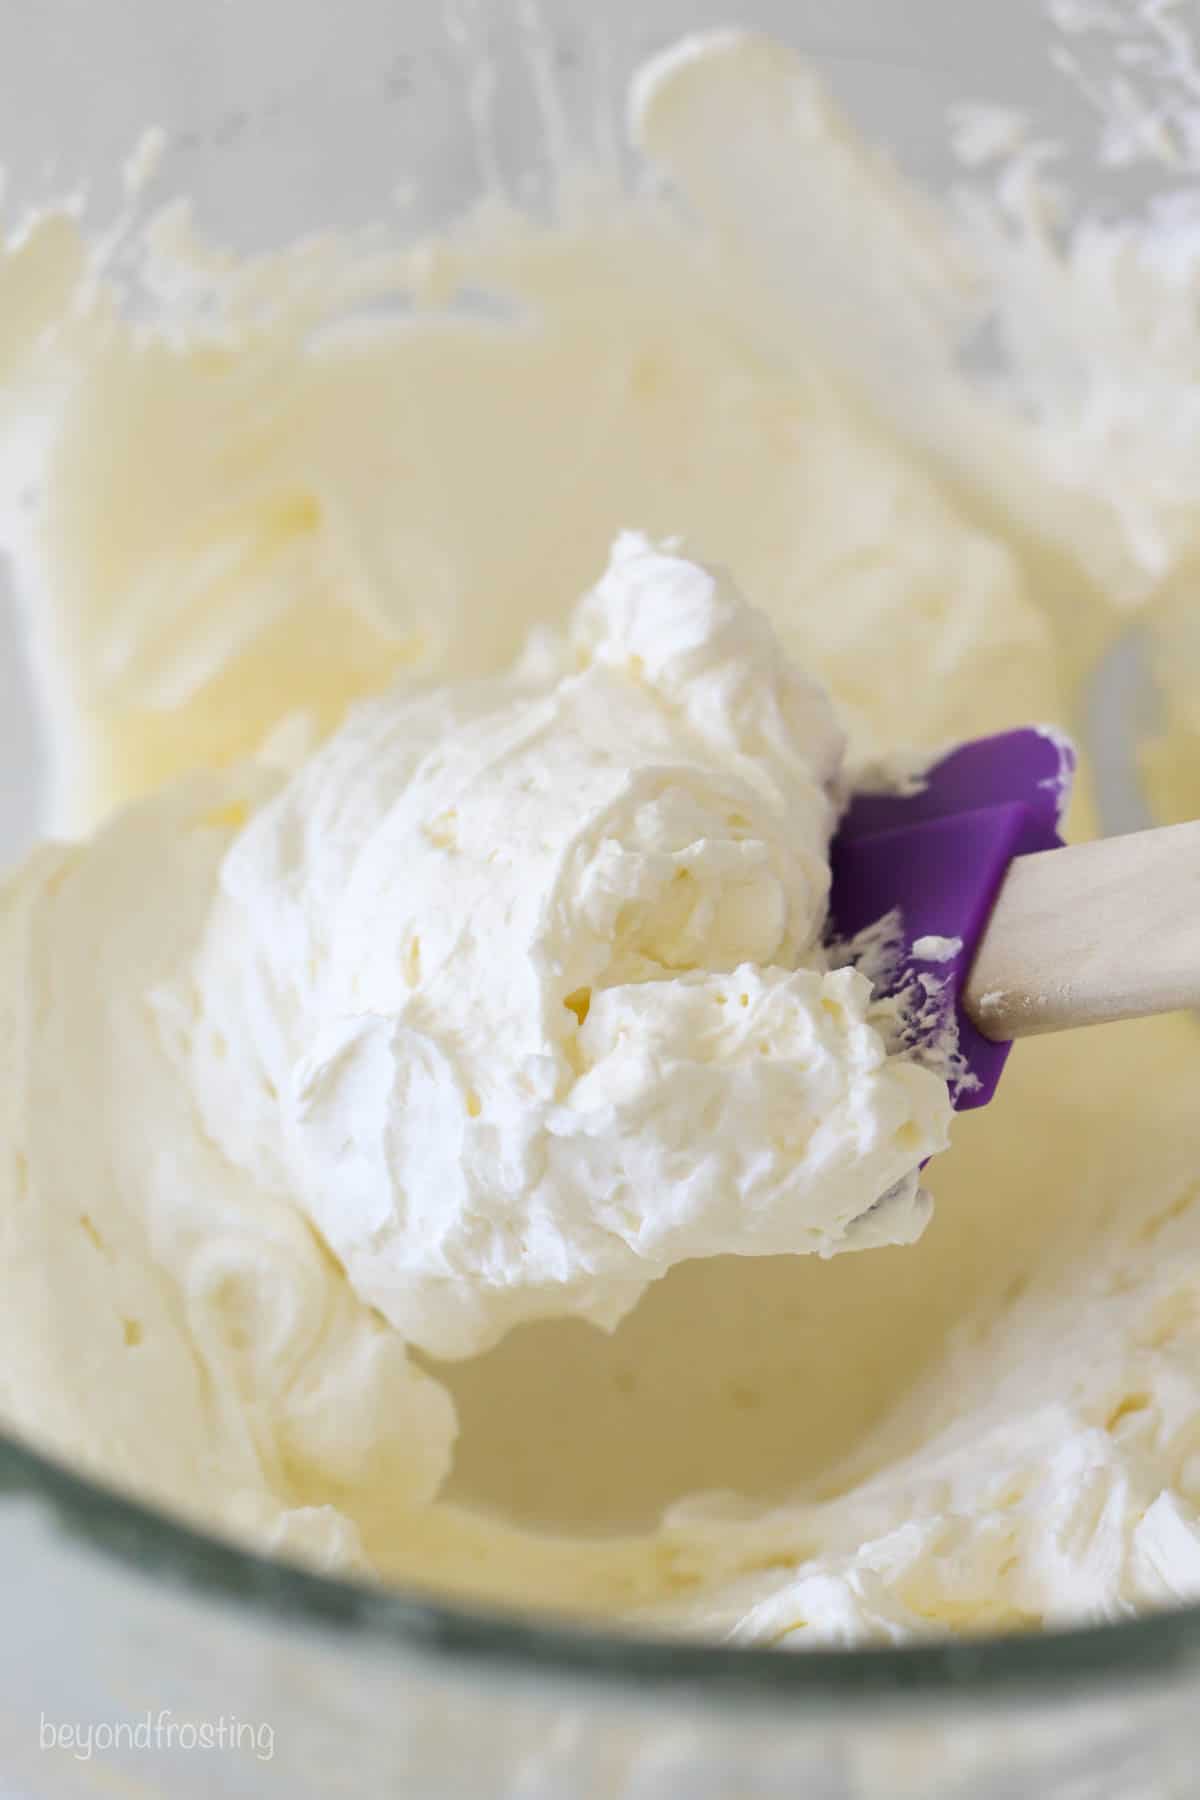 A purple spatula with whipped cream